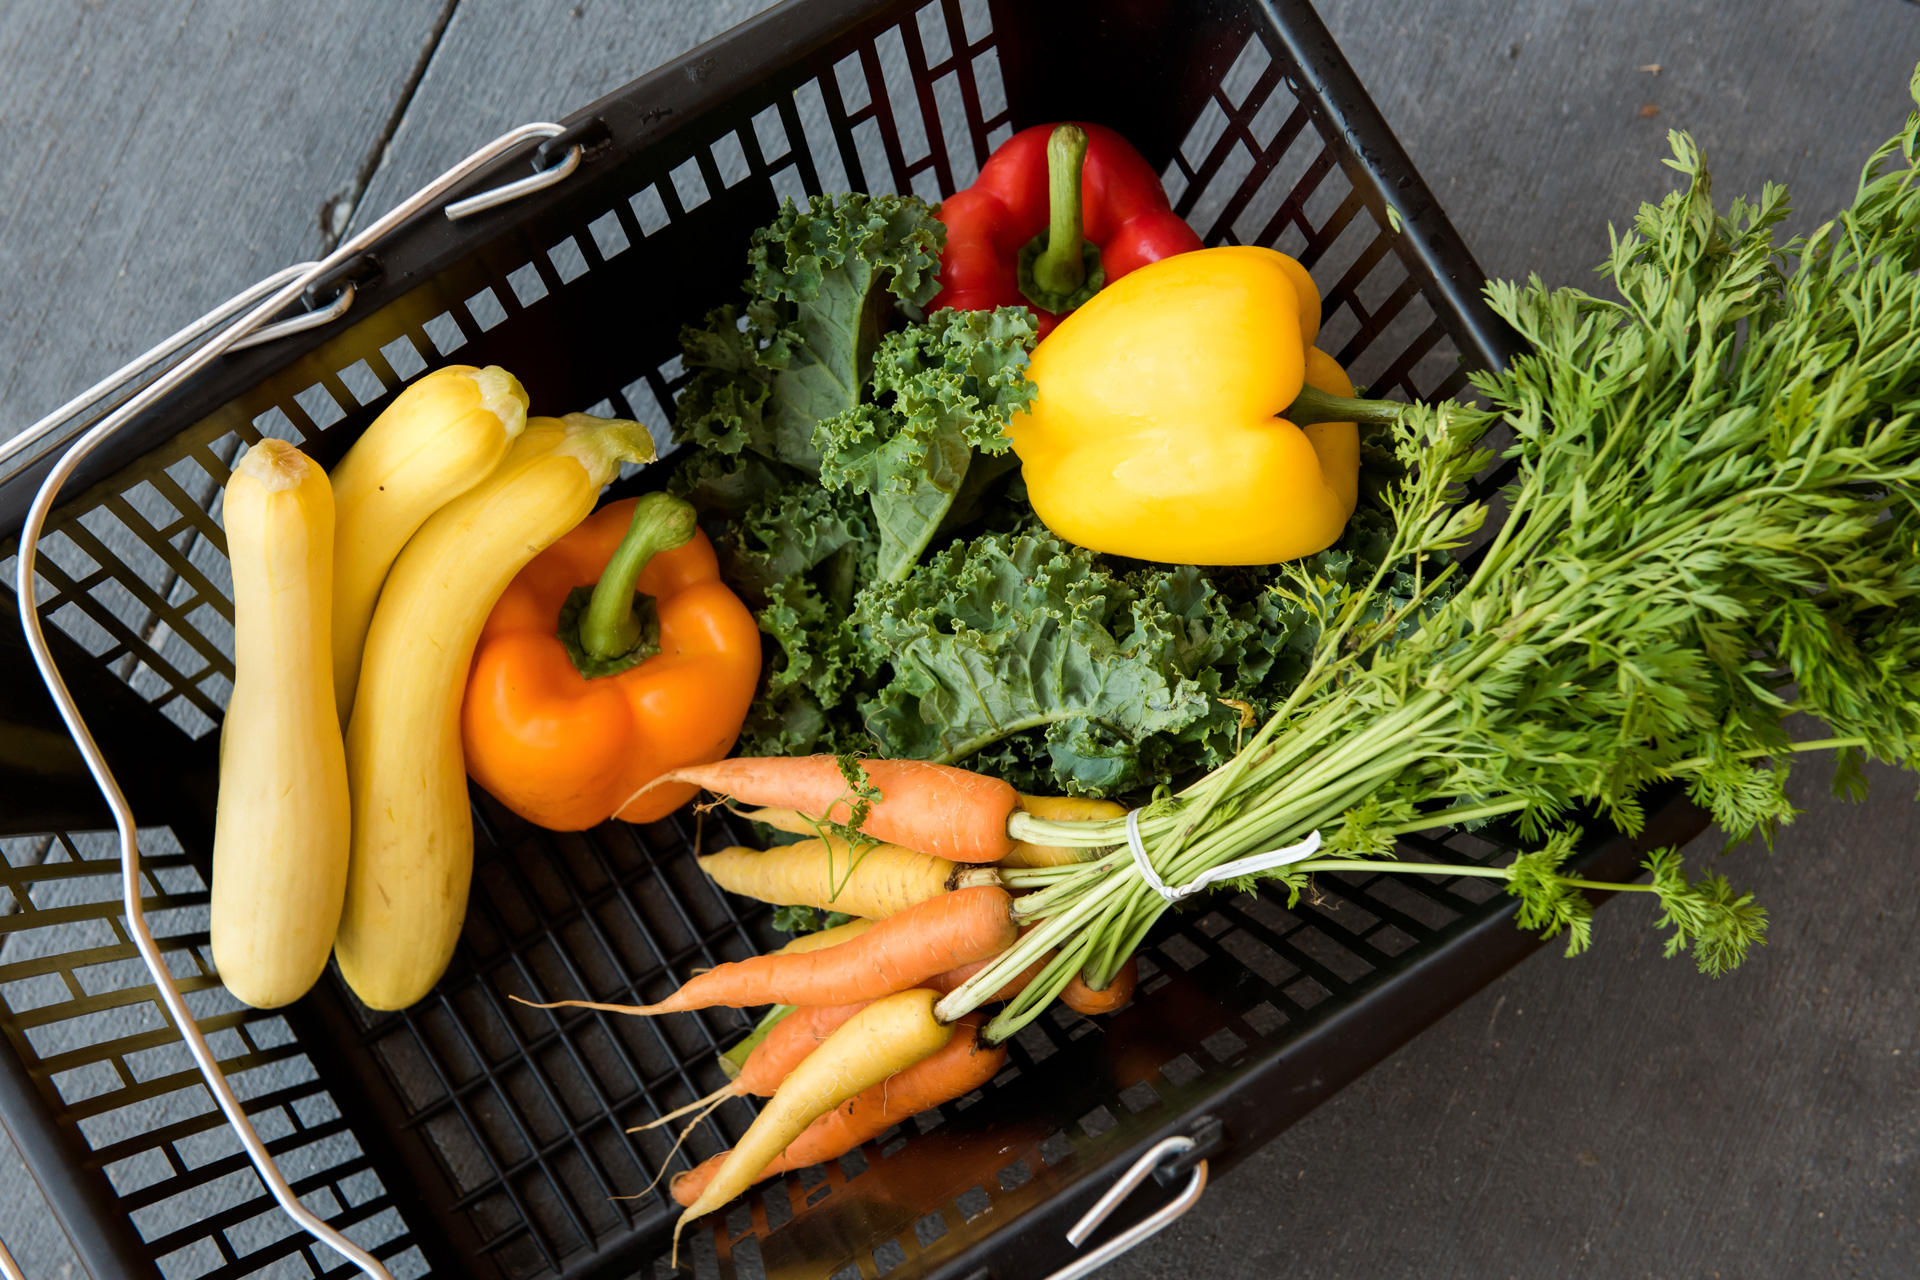 Supermarket basket containing fresh vegetables